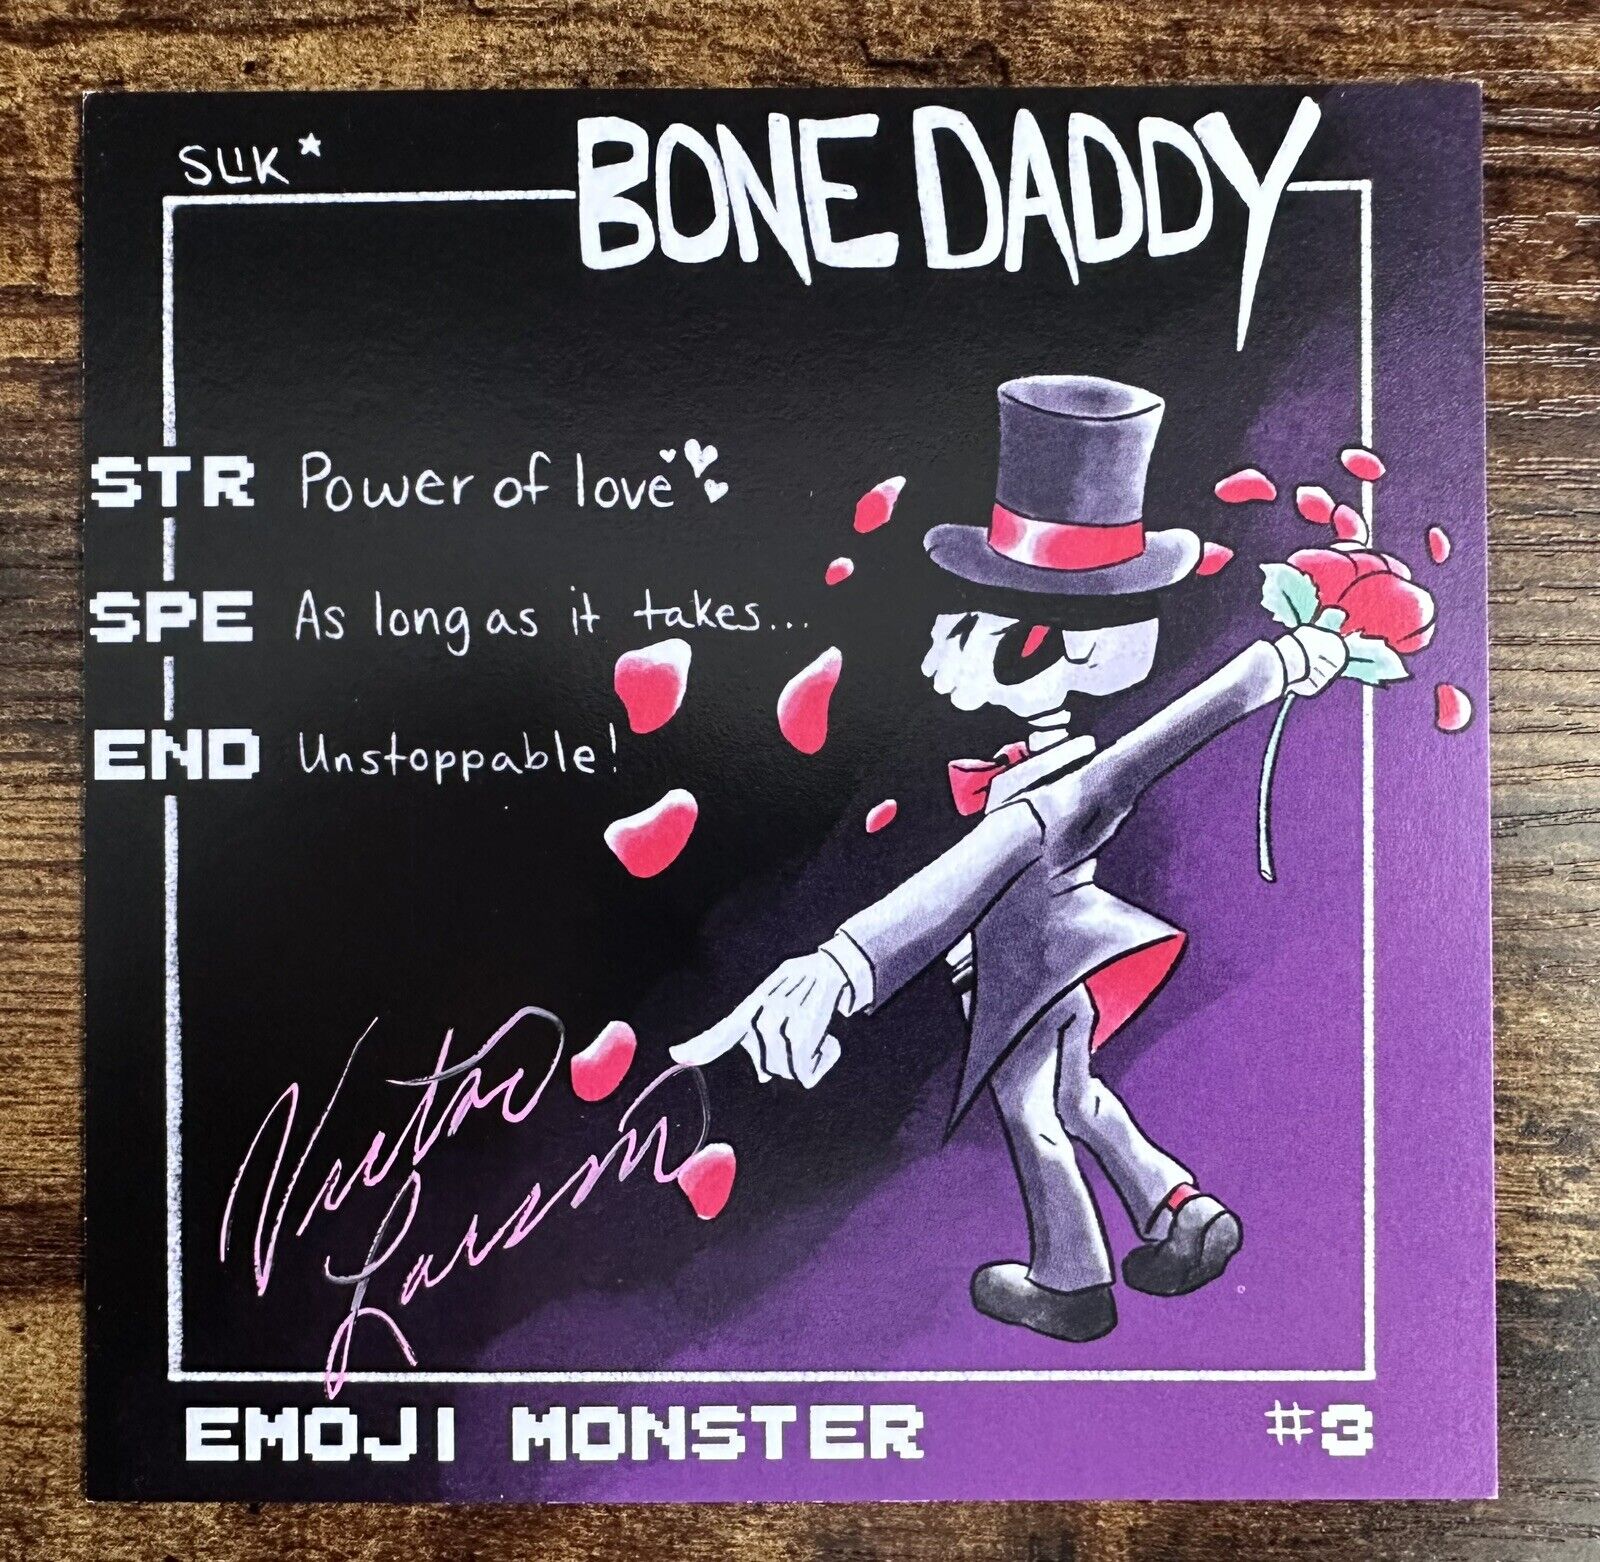 NOM NOM Verse Emoji Monster #3 BONE DADDY Print - Signed by Victor Larson